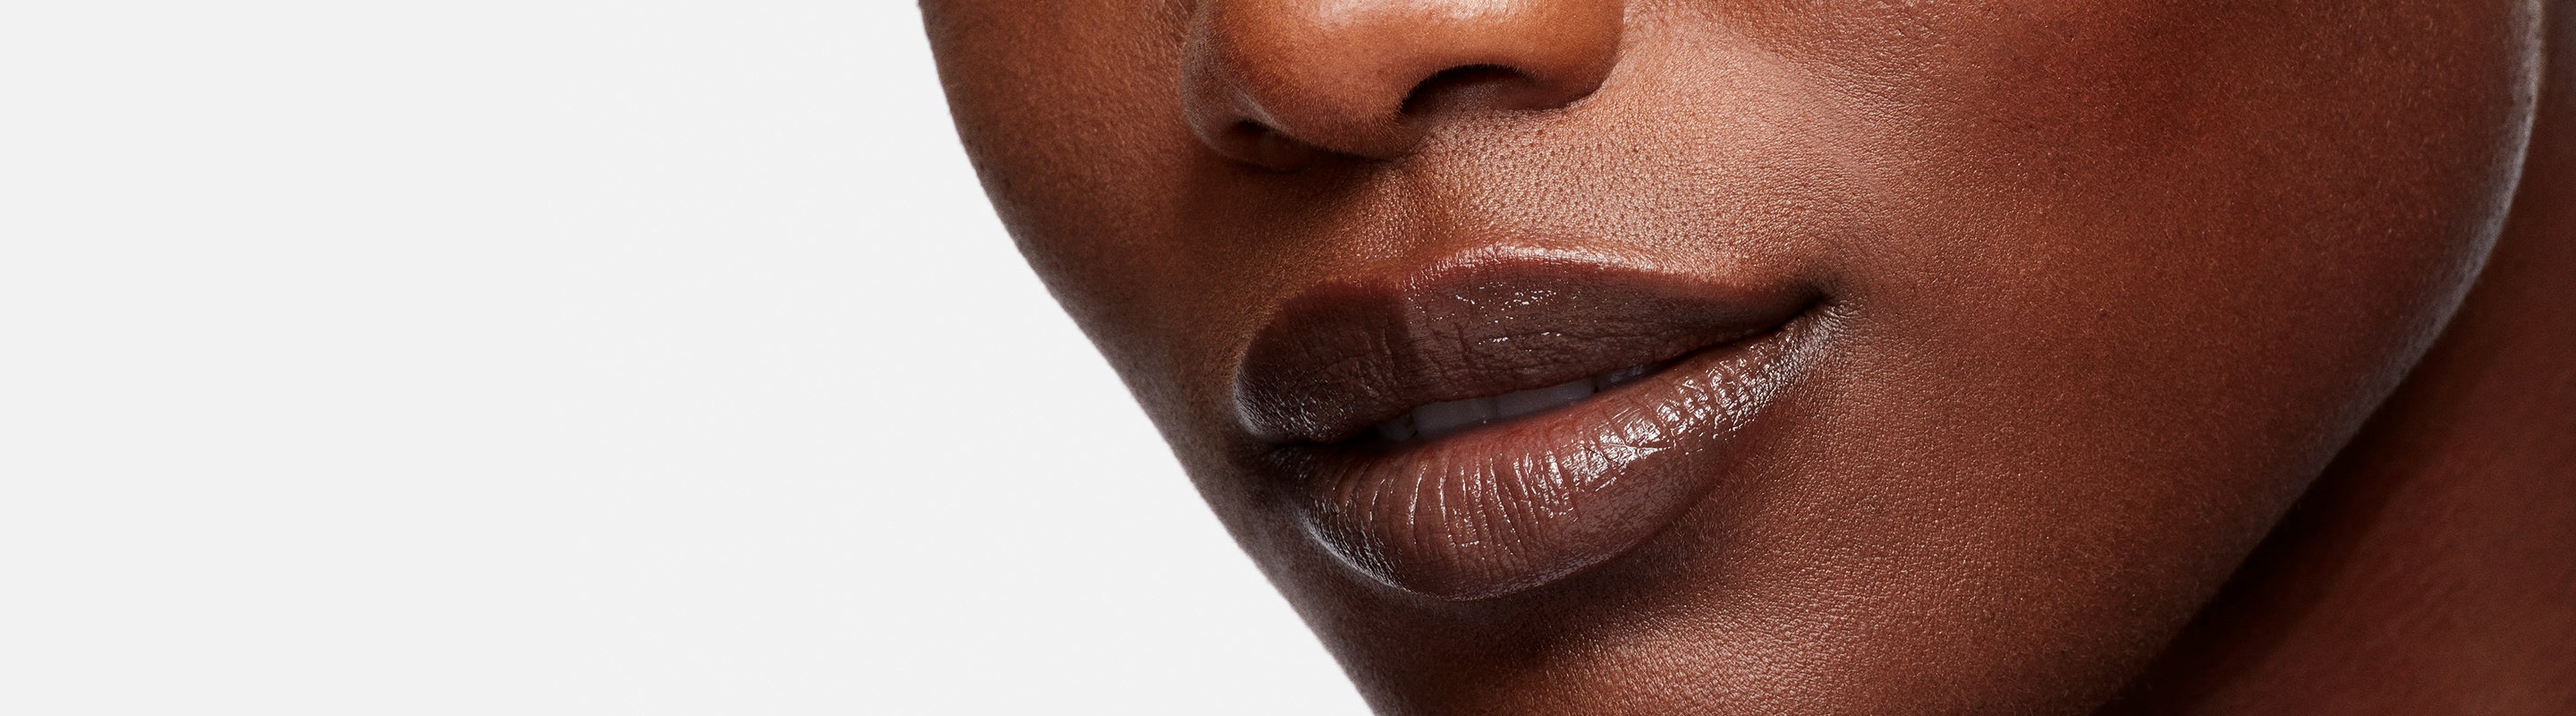 lip care and lip treatments